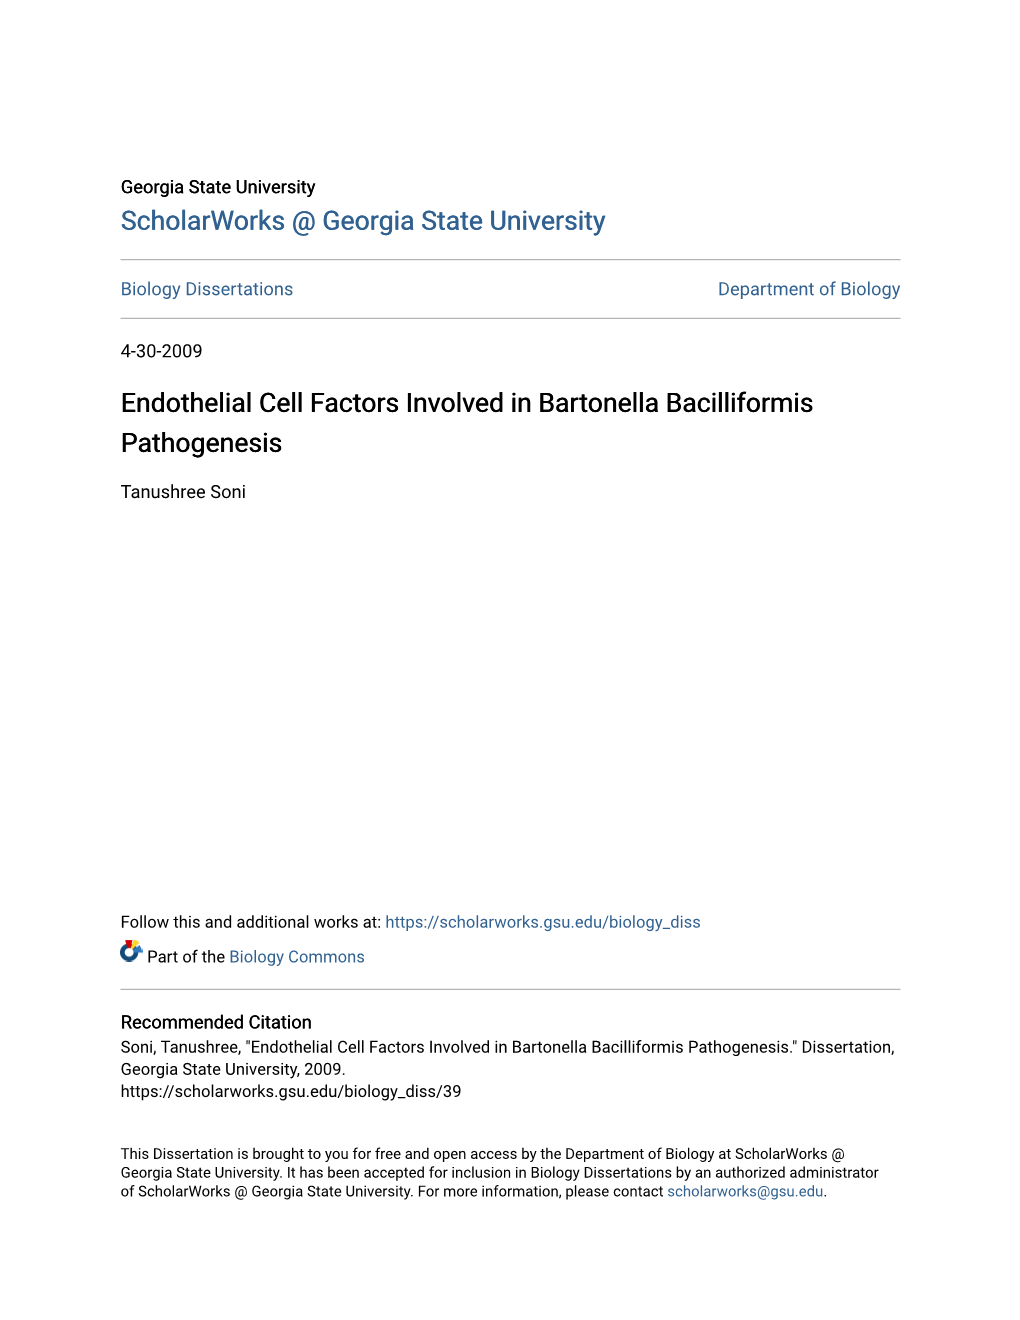 Endothelial Cell Factors Involved in Bartonella Bacilliformis Pathogenesis